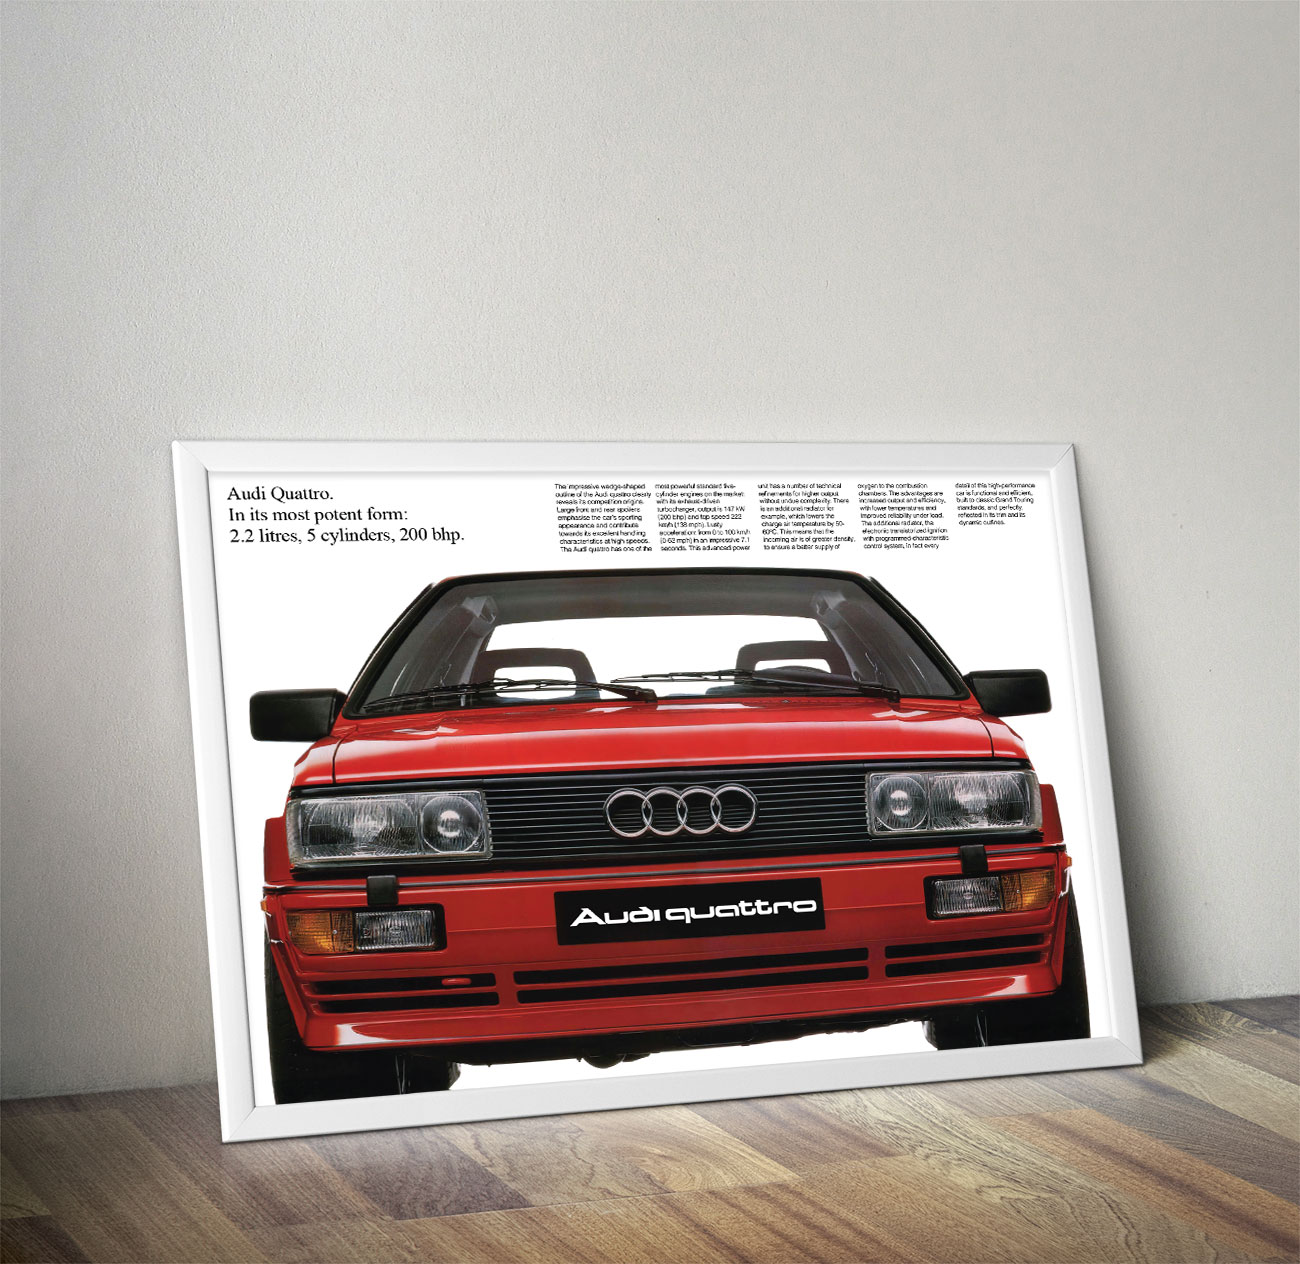 Audi Quattro Coupé Vintage Poster - Turbo Dogma